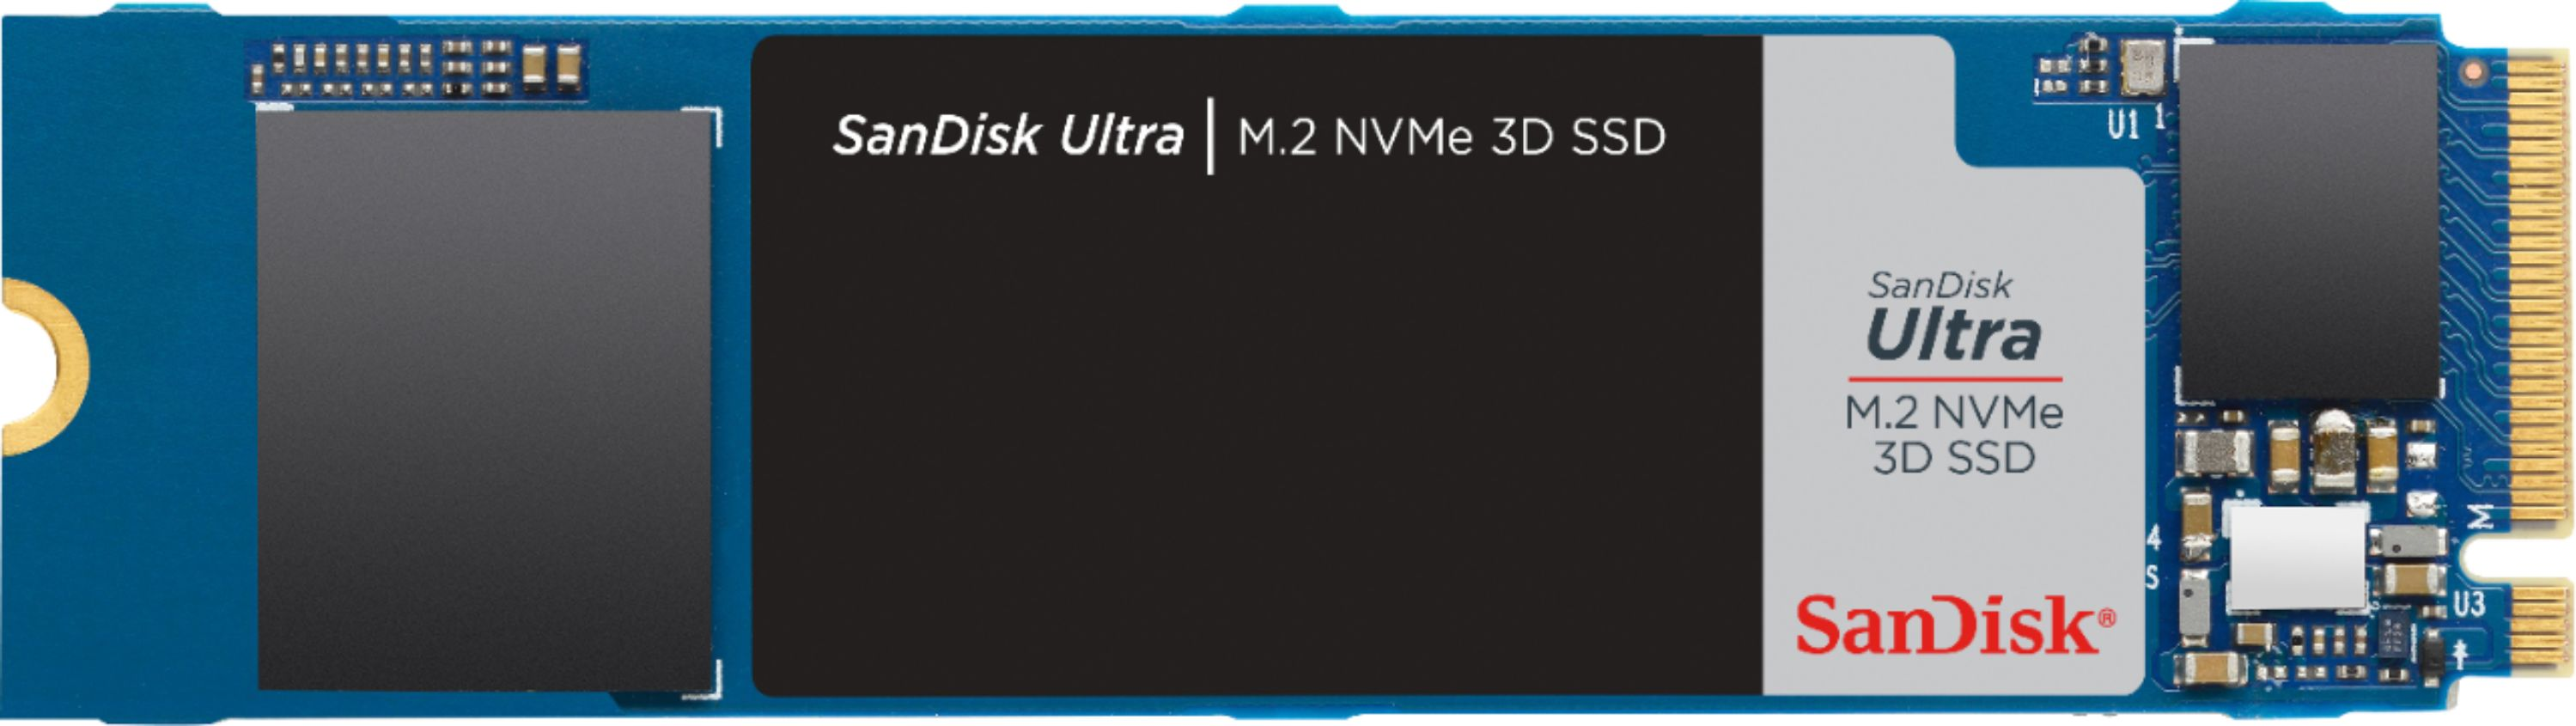 SanDisk Ultra 1TB PCIe Gen 3 x4 NVMe Internal Solid State Drive SDSSDH3N-1T00-G25 - Best Buy $83.99